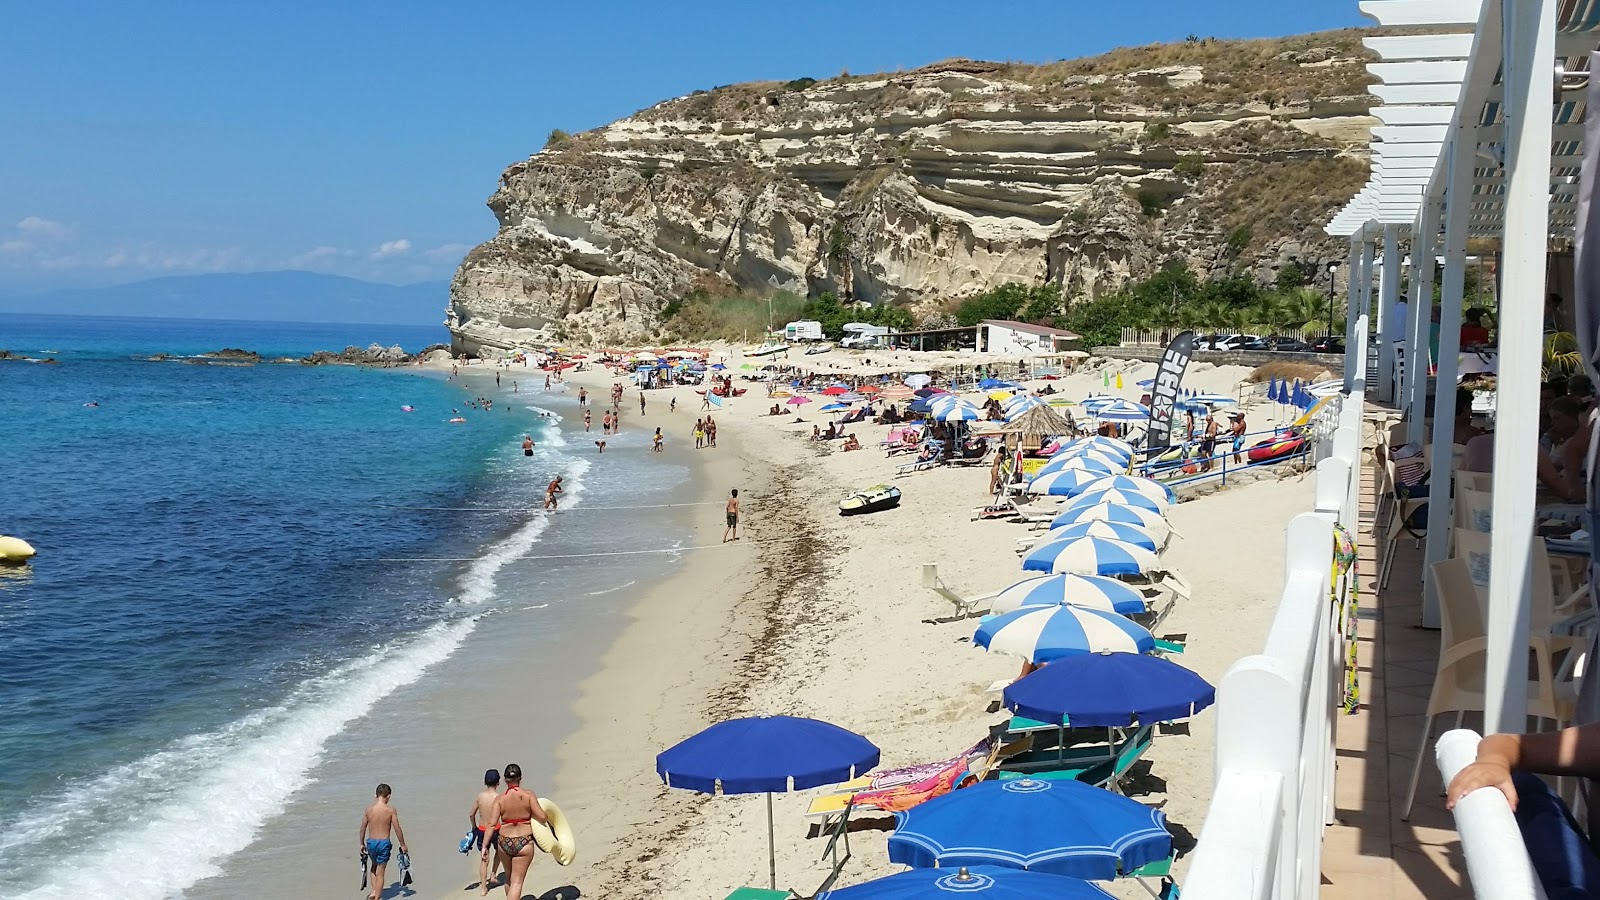 Spiaggia di Riaci'in fotoğrafı parlak kum yüzey ile